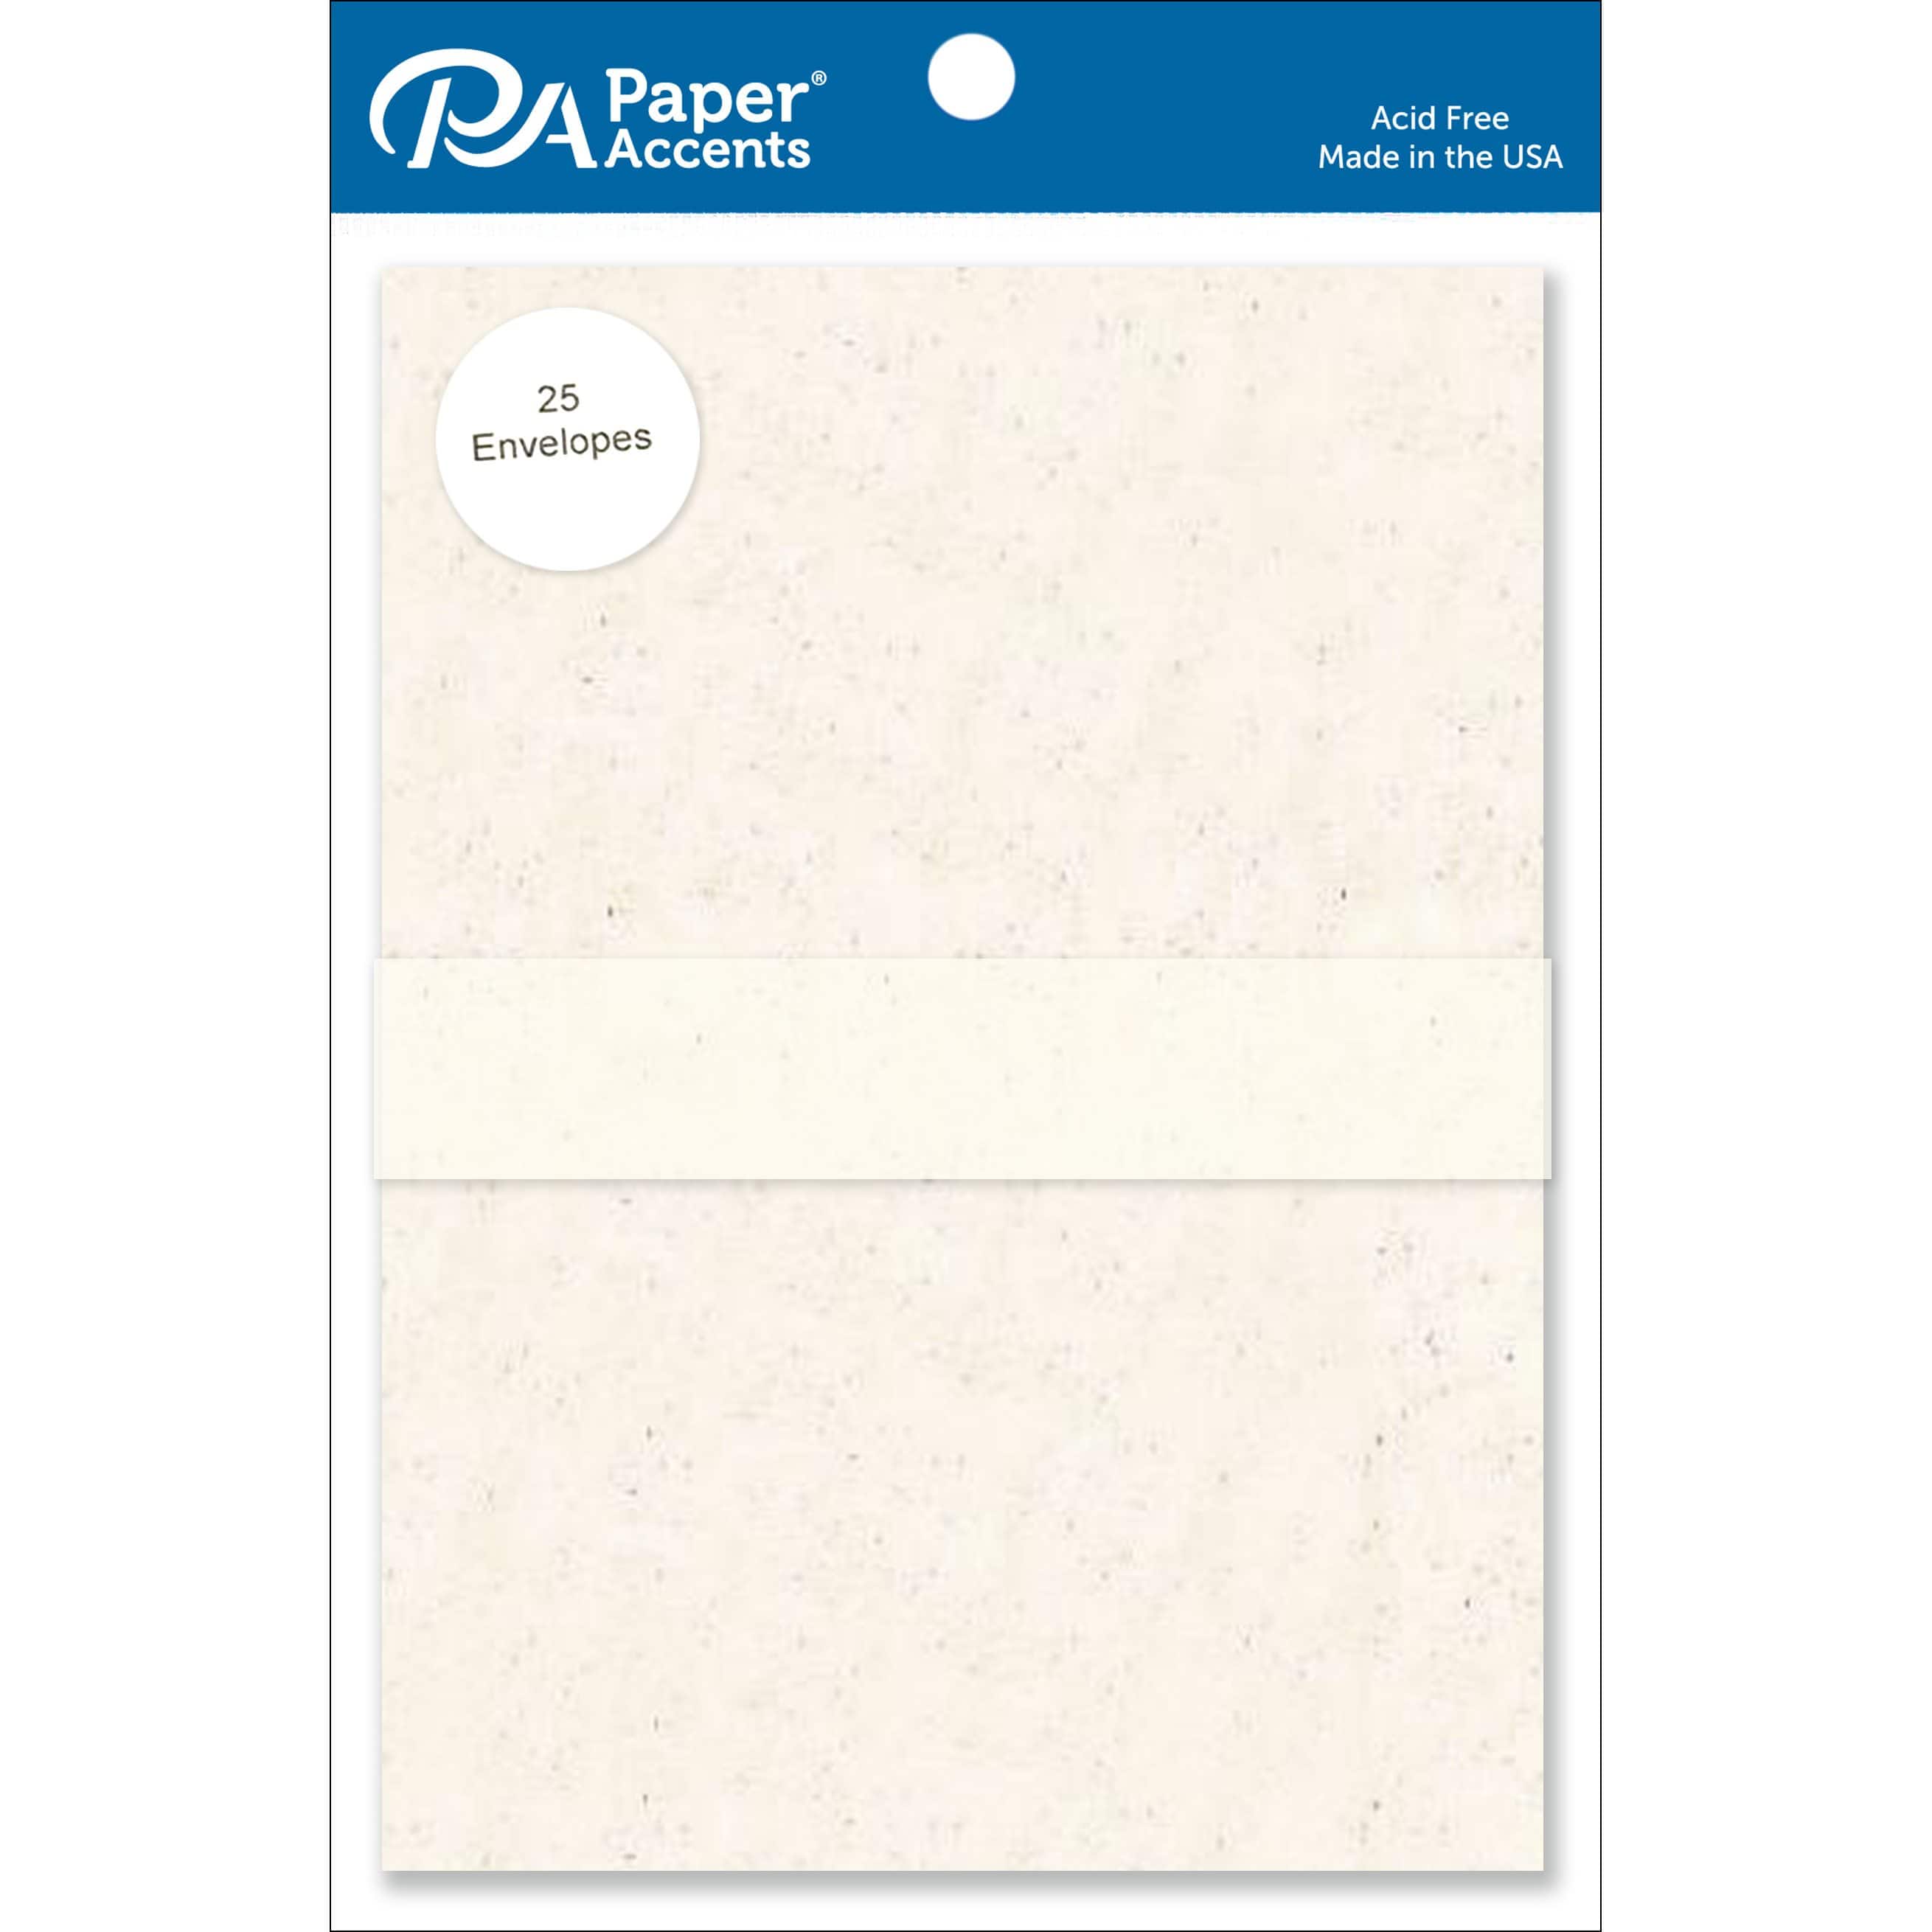 PA Paper™ Accents 5.25" x 7.25" Envelope, 25ct.